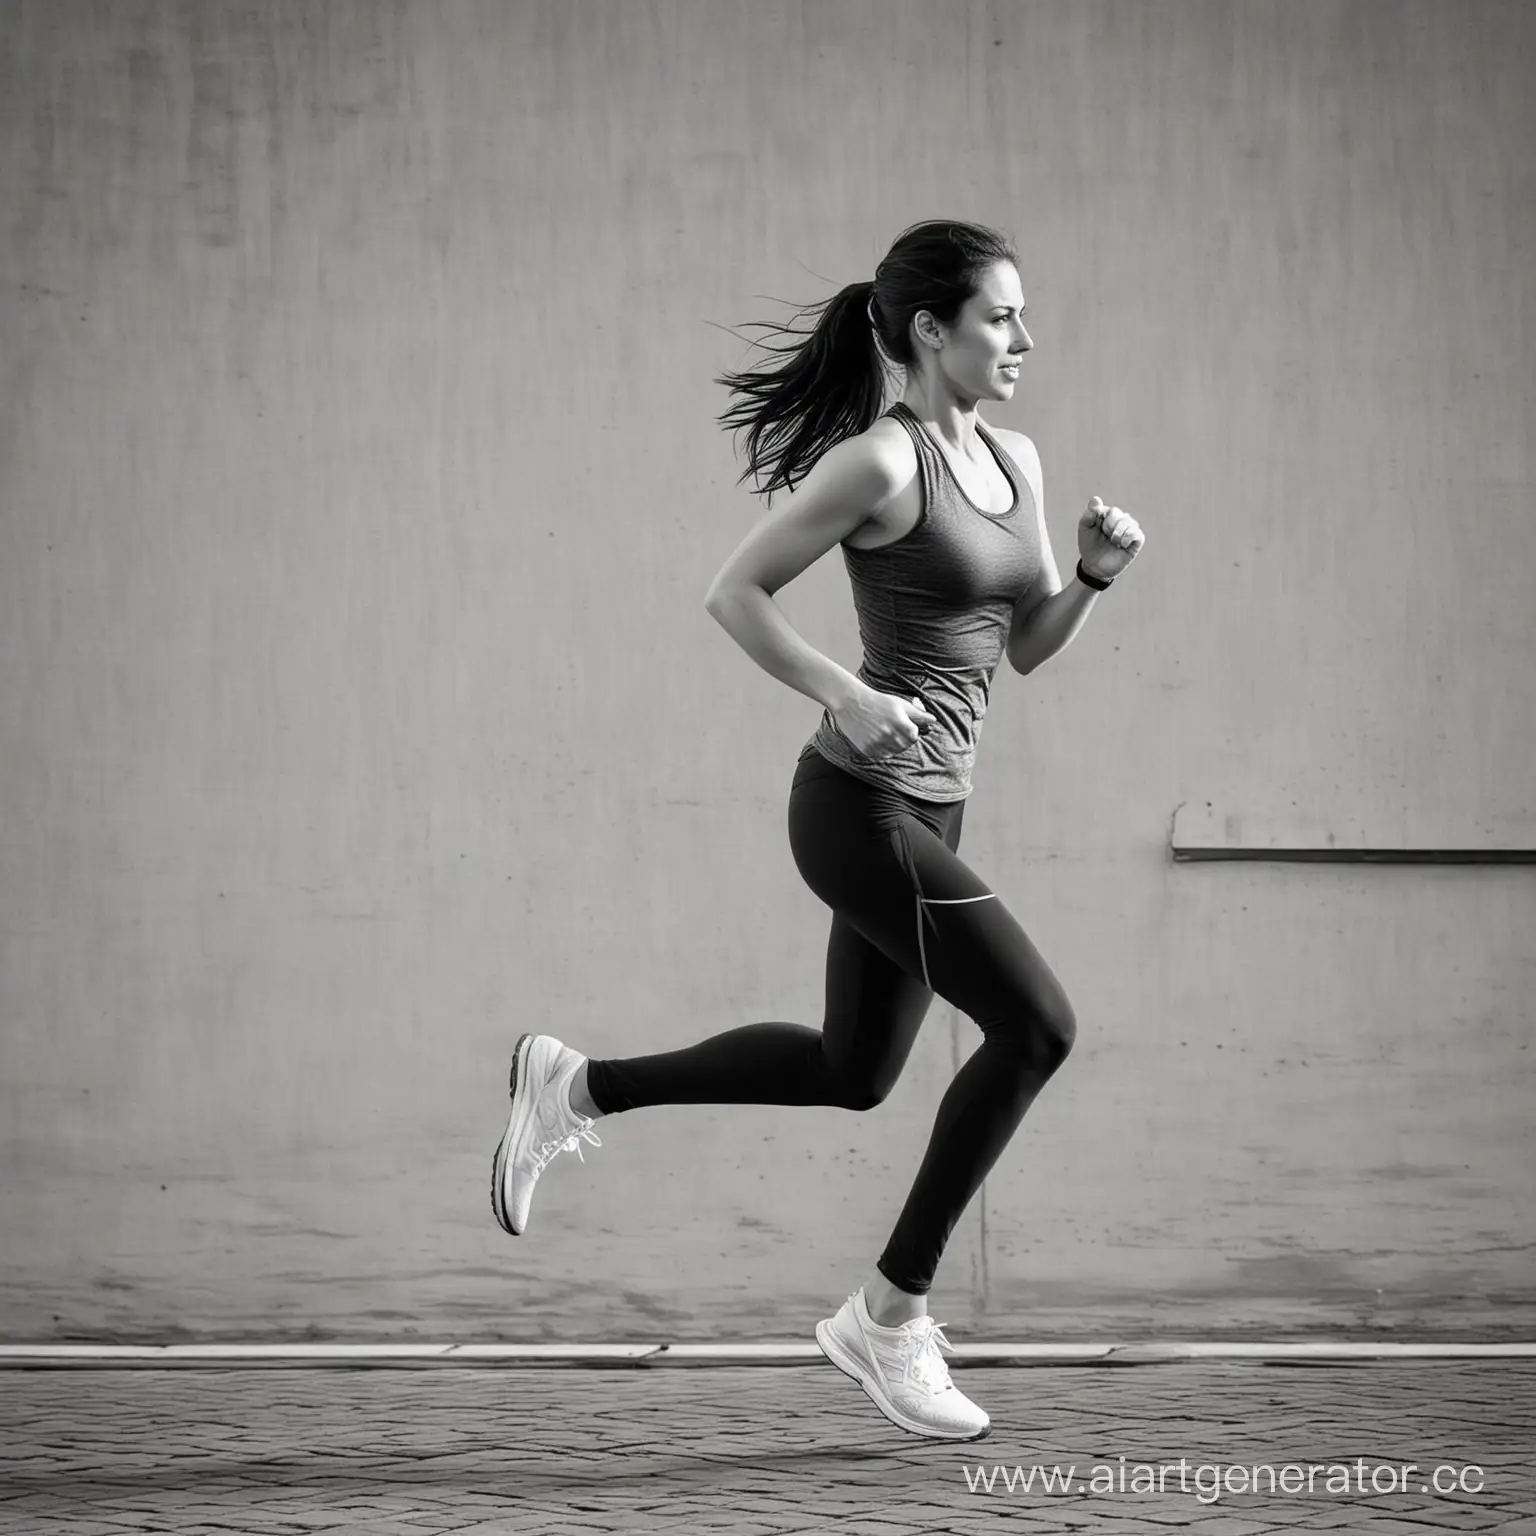 Running woman